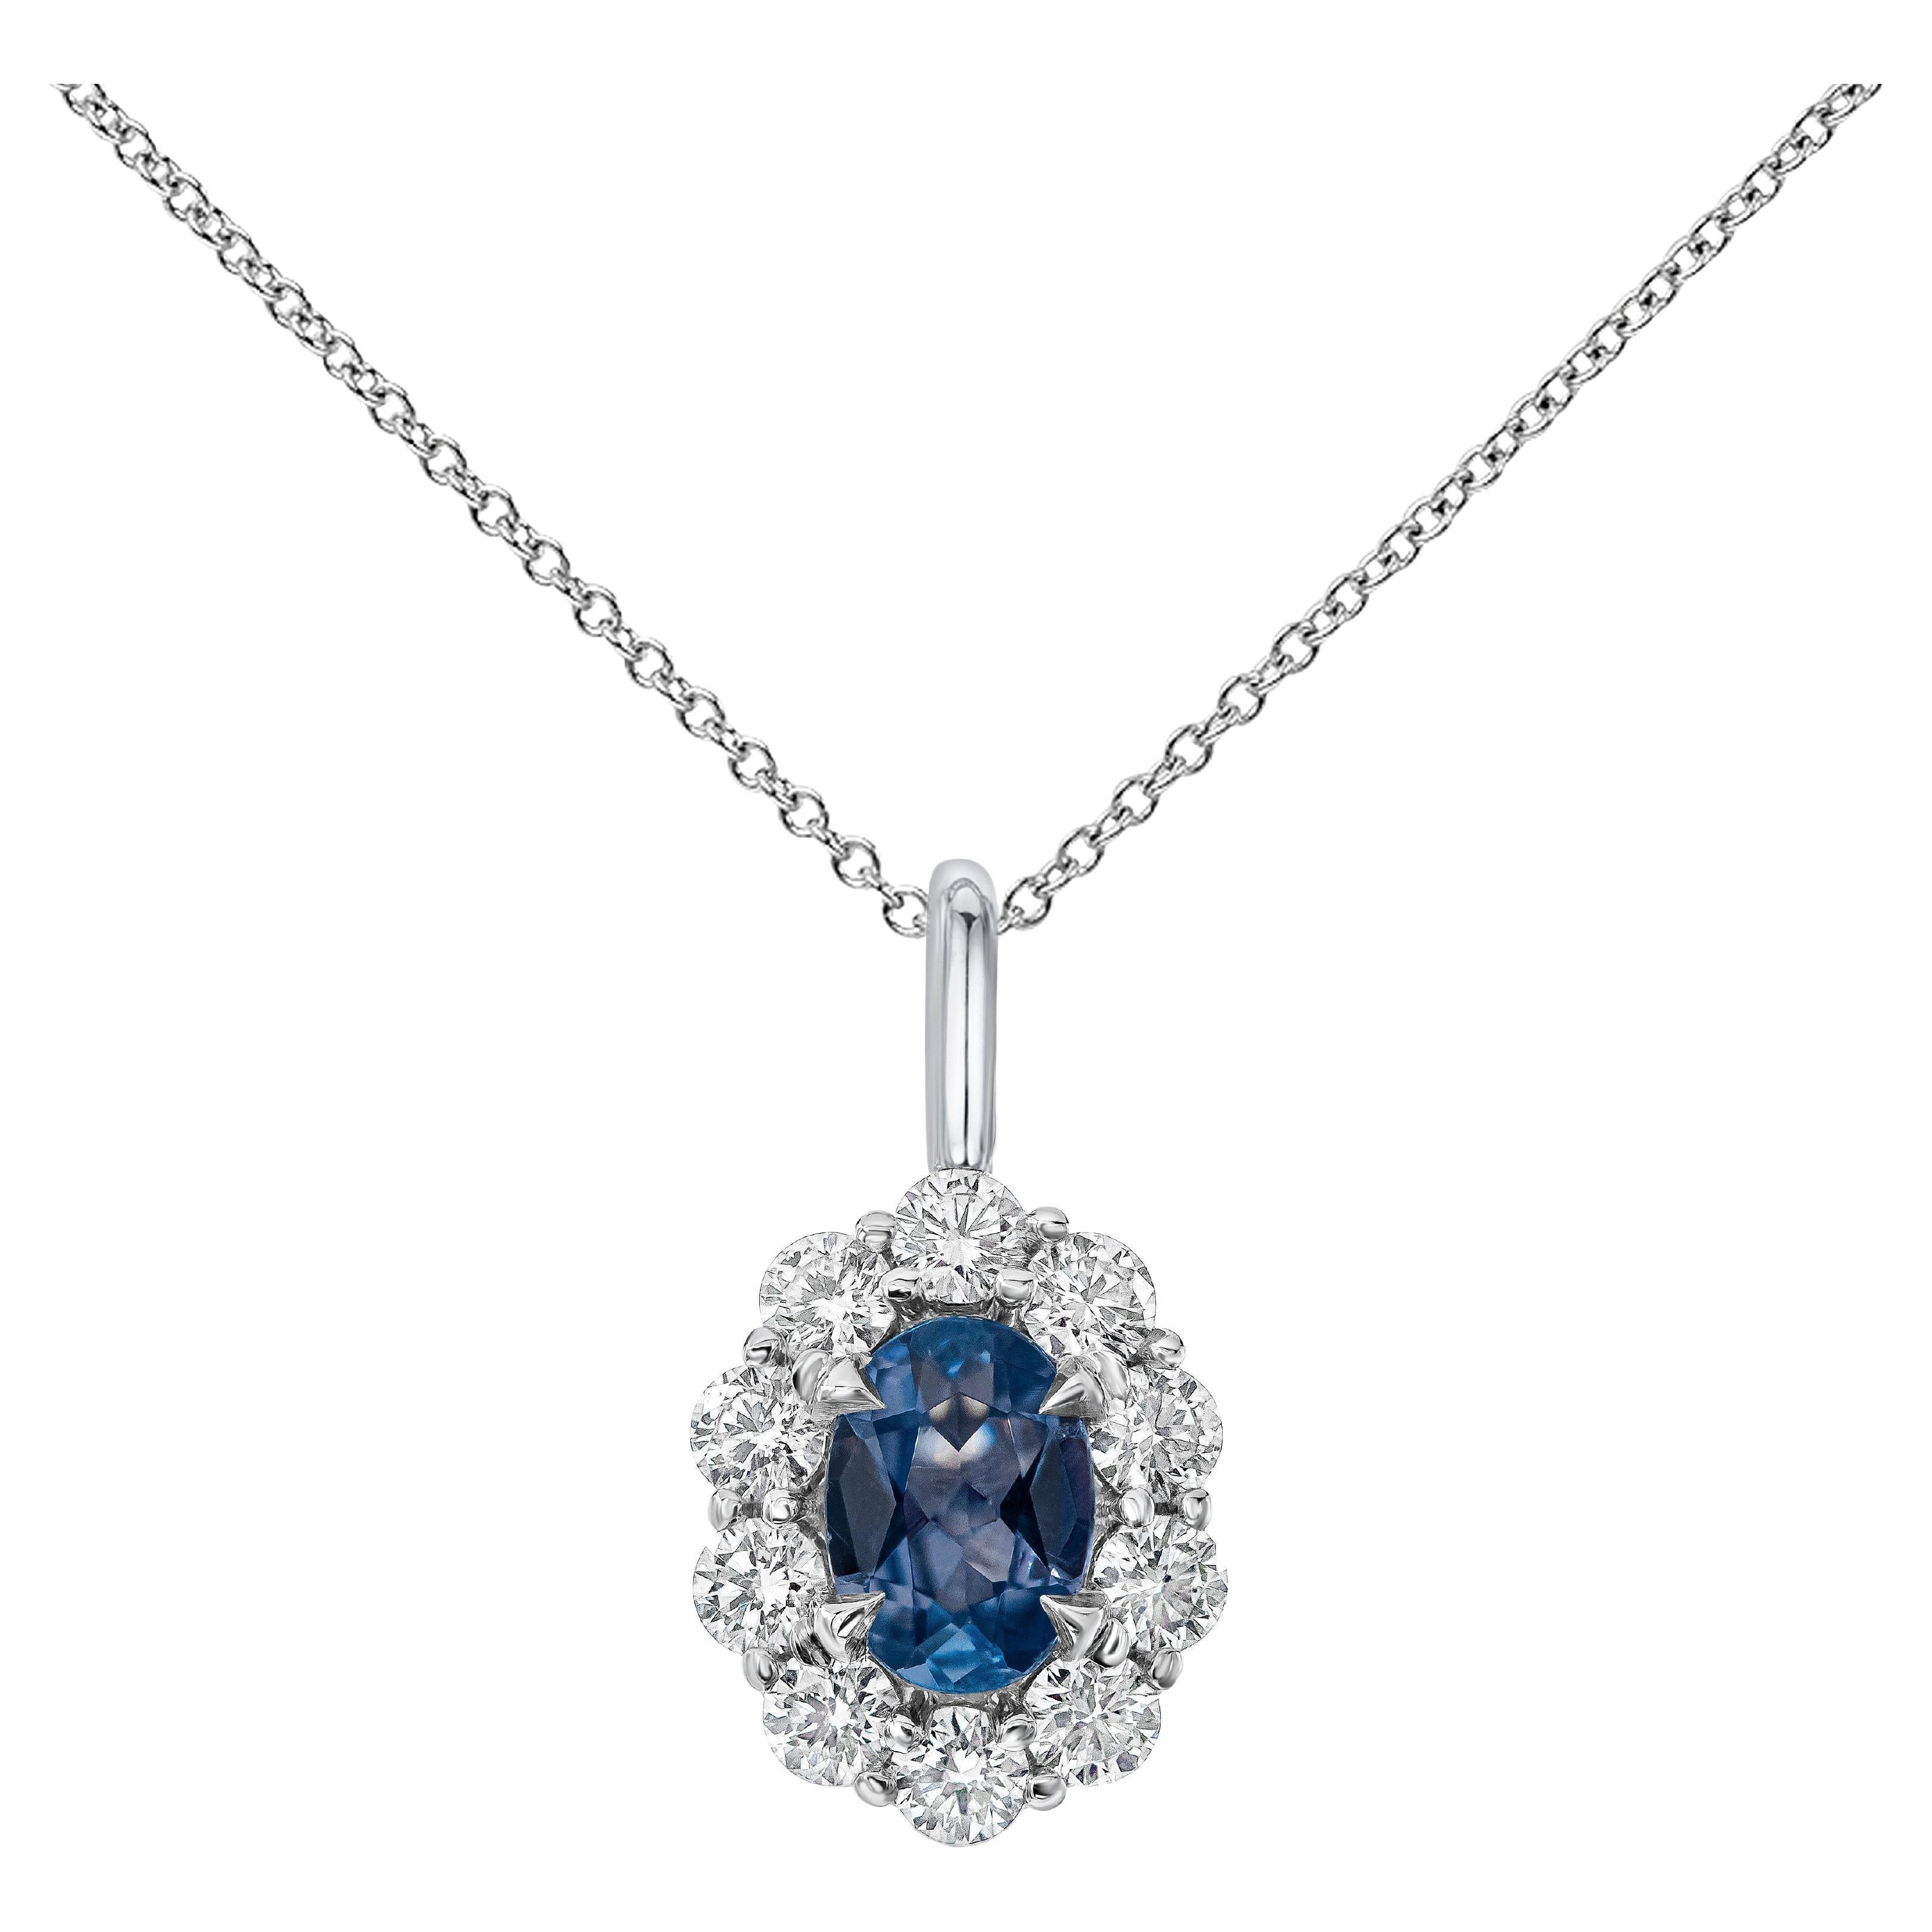 Roman Malakov 0.38 Carat Oval Cut Sapphire with Diamond Halo Pendant Necklace For Sale